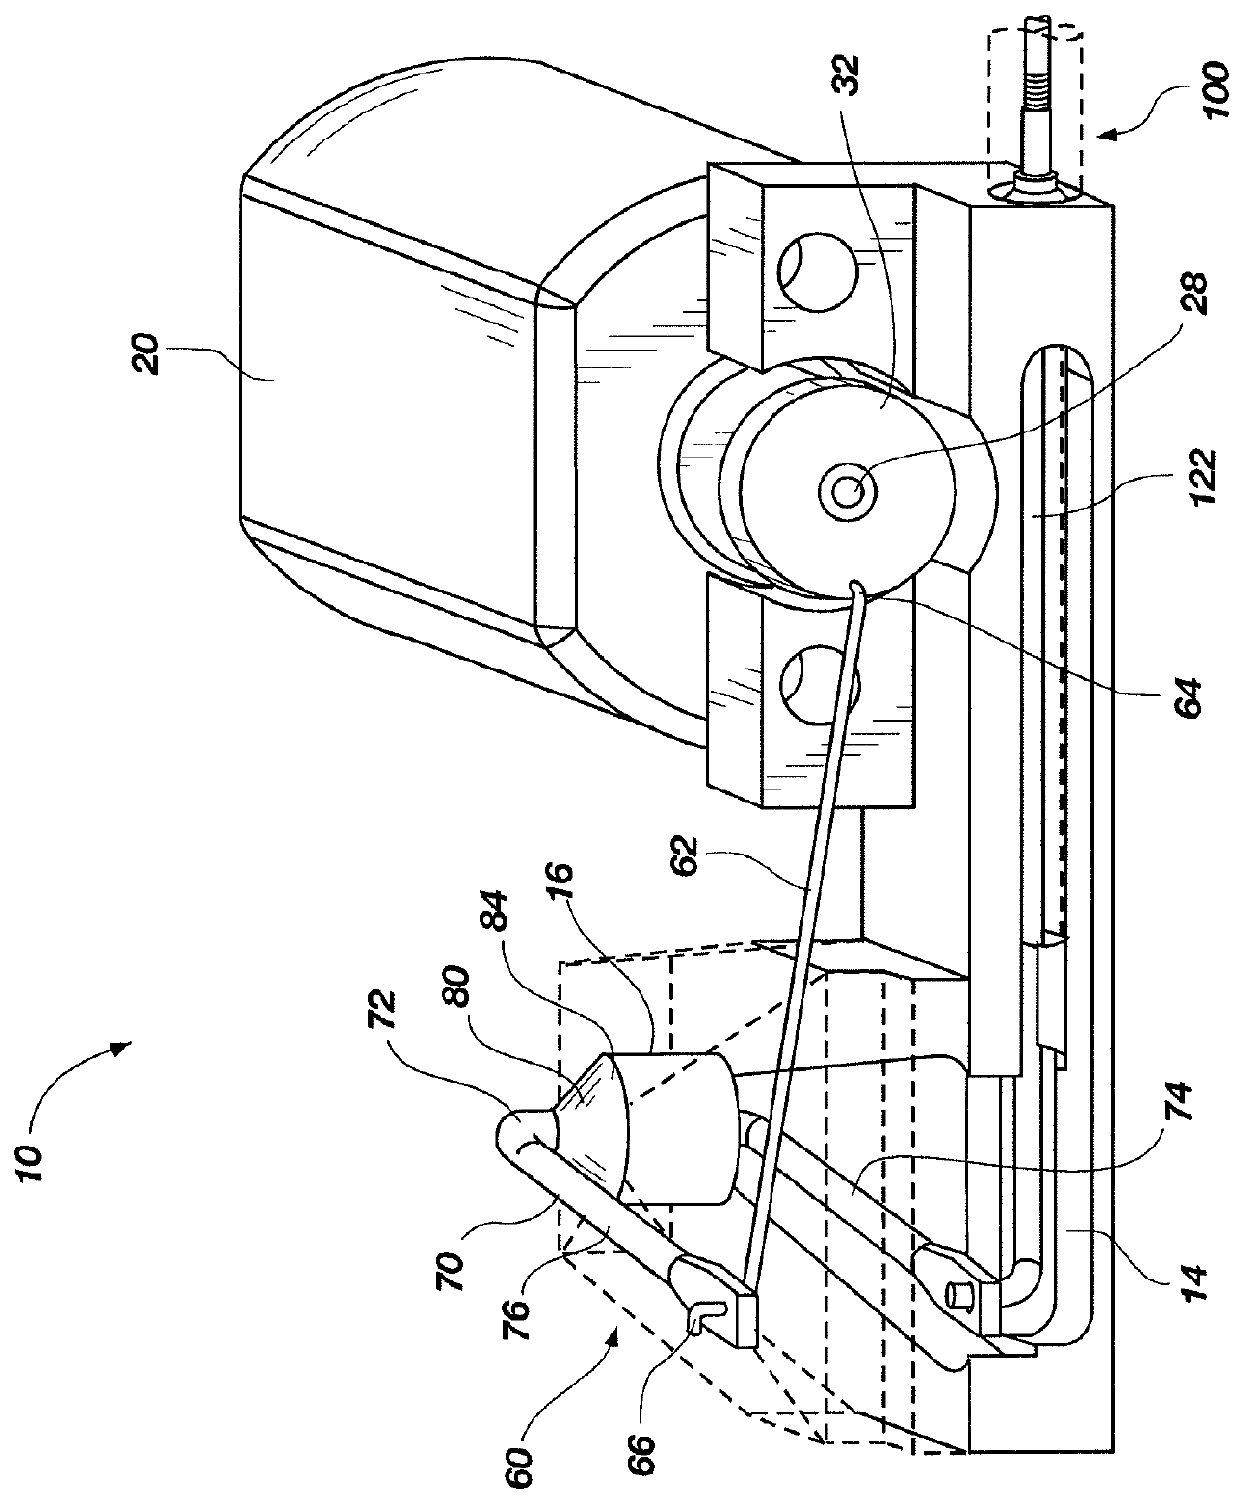 Miniature pump device and method